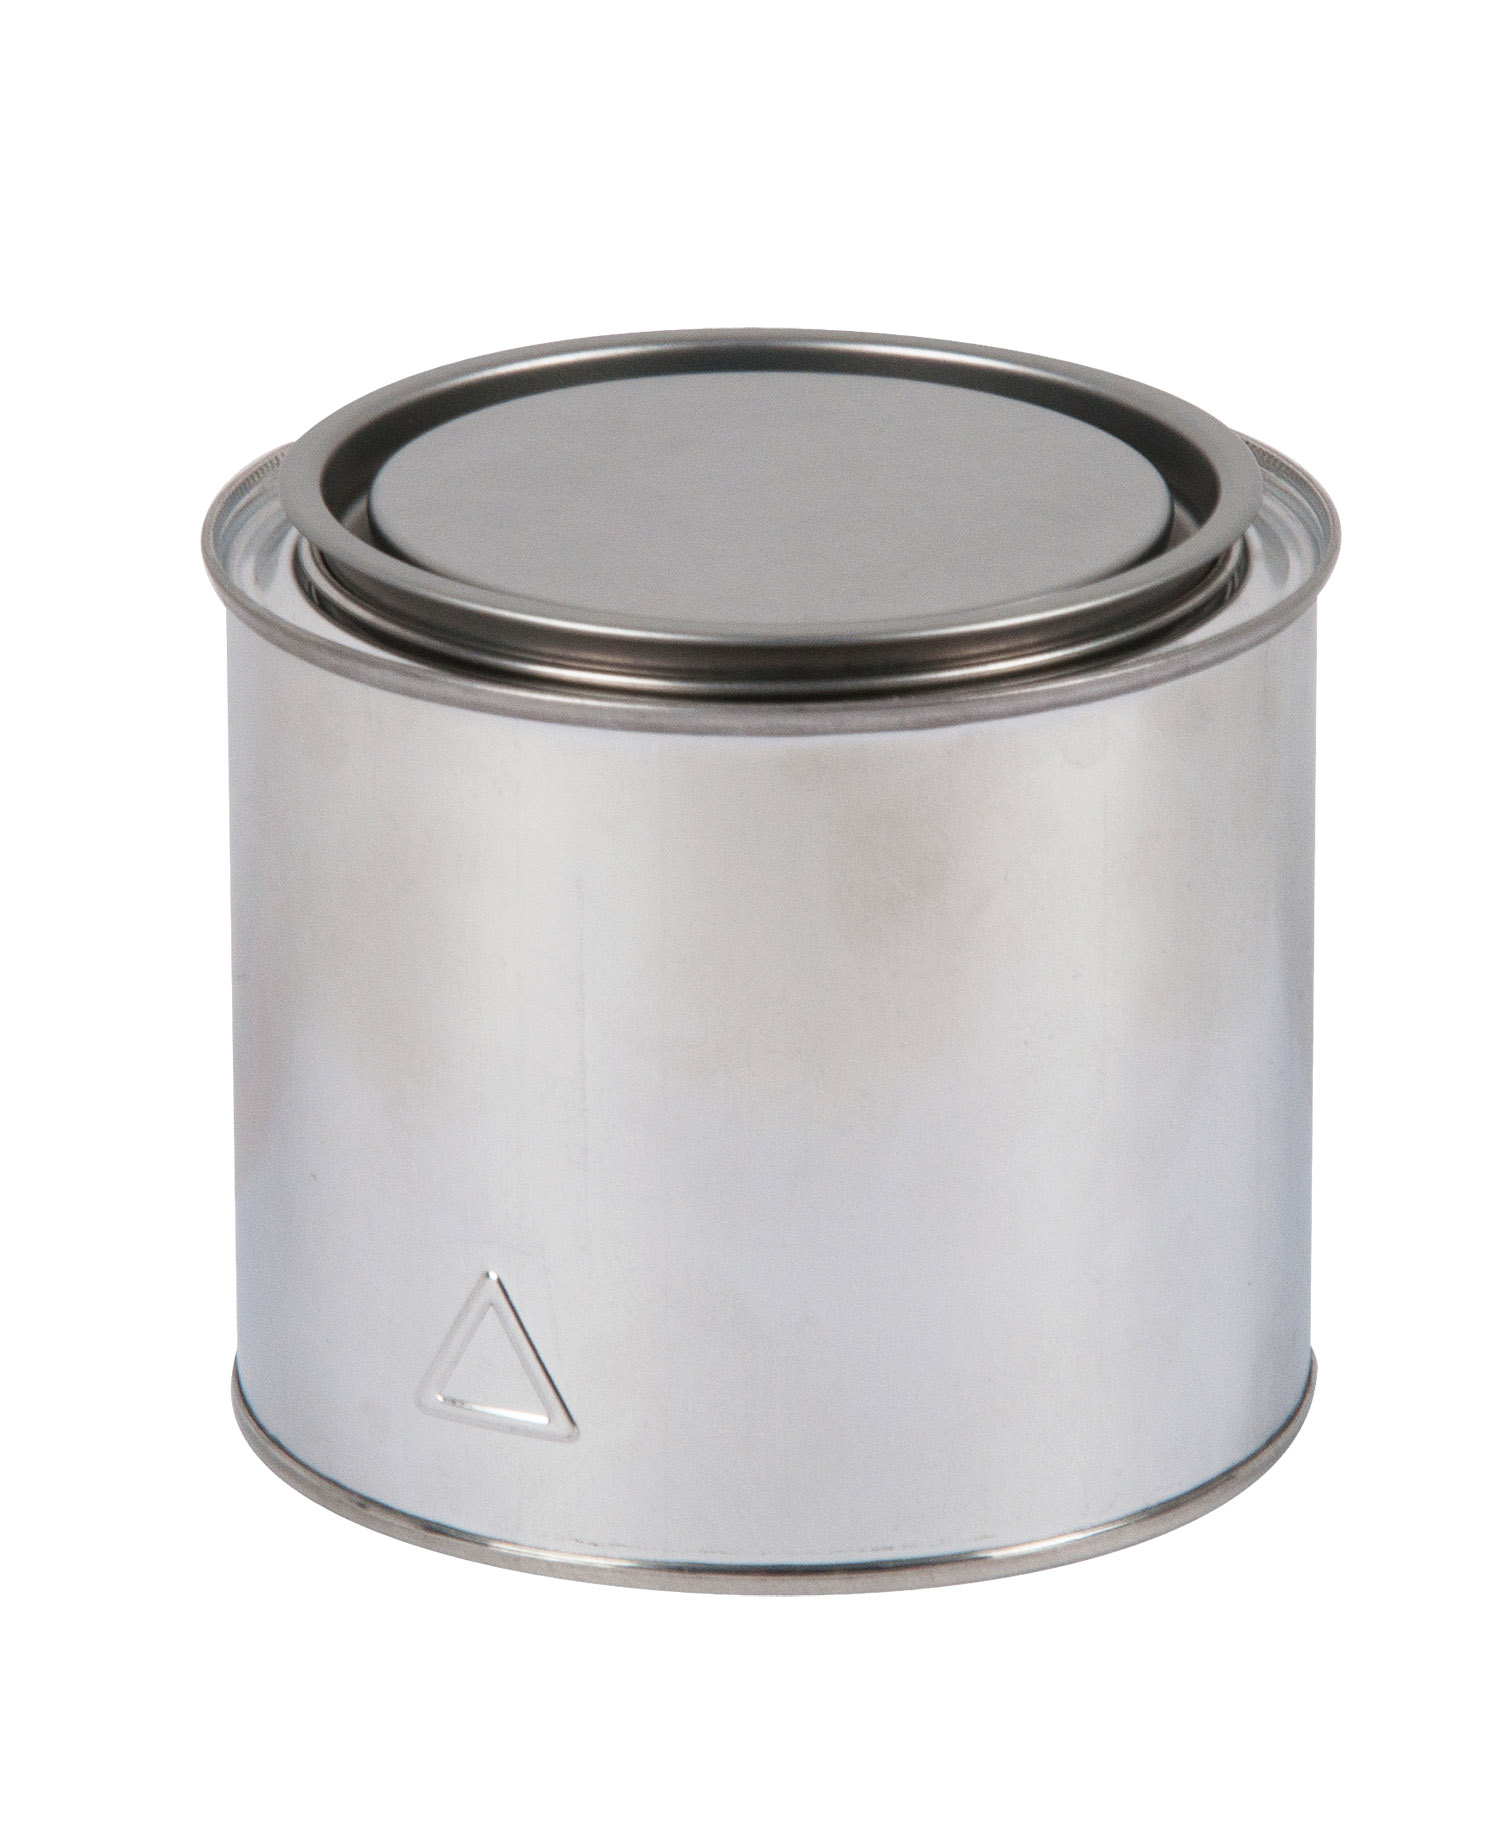 APP 250210 CAN - Blechdose Lackdose Leerdose für Lacke + Deckel 0,5 L | Büchse Dose Blech Lack Farbe